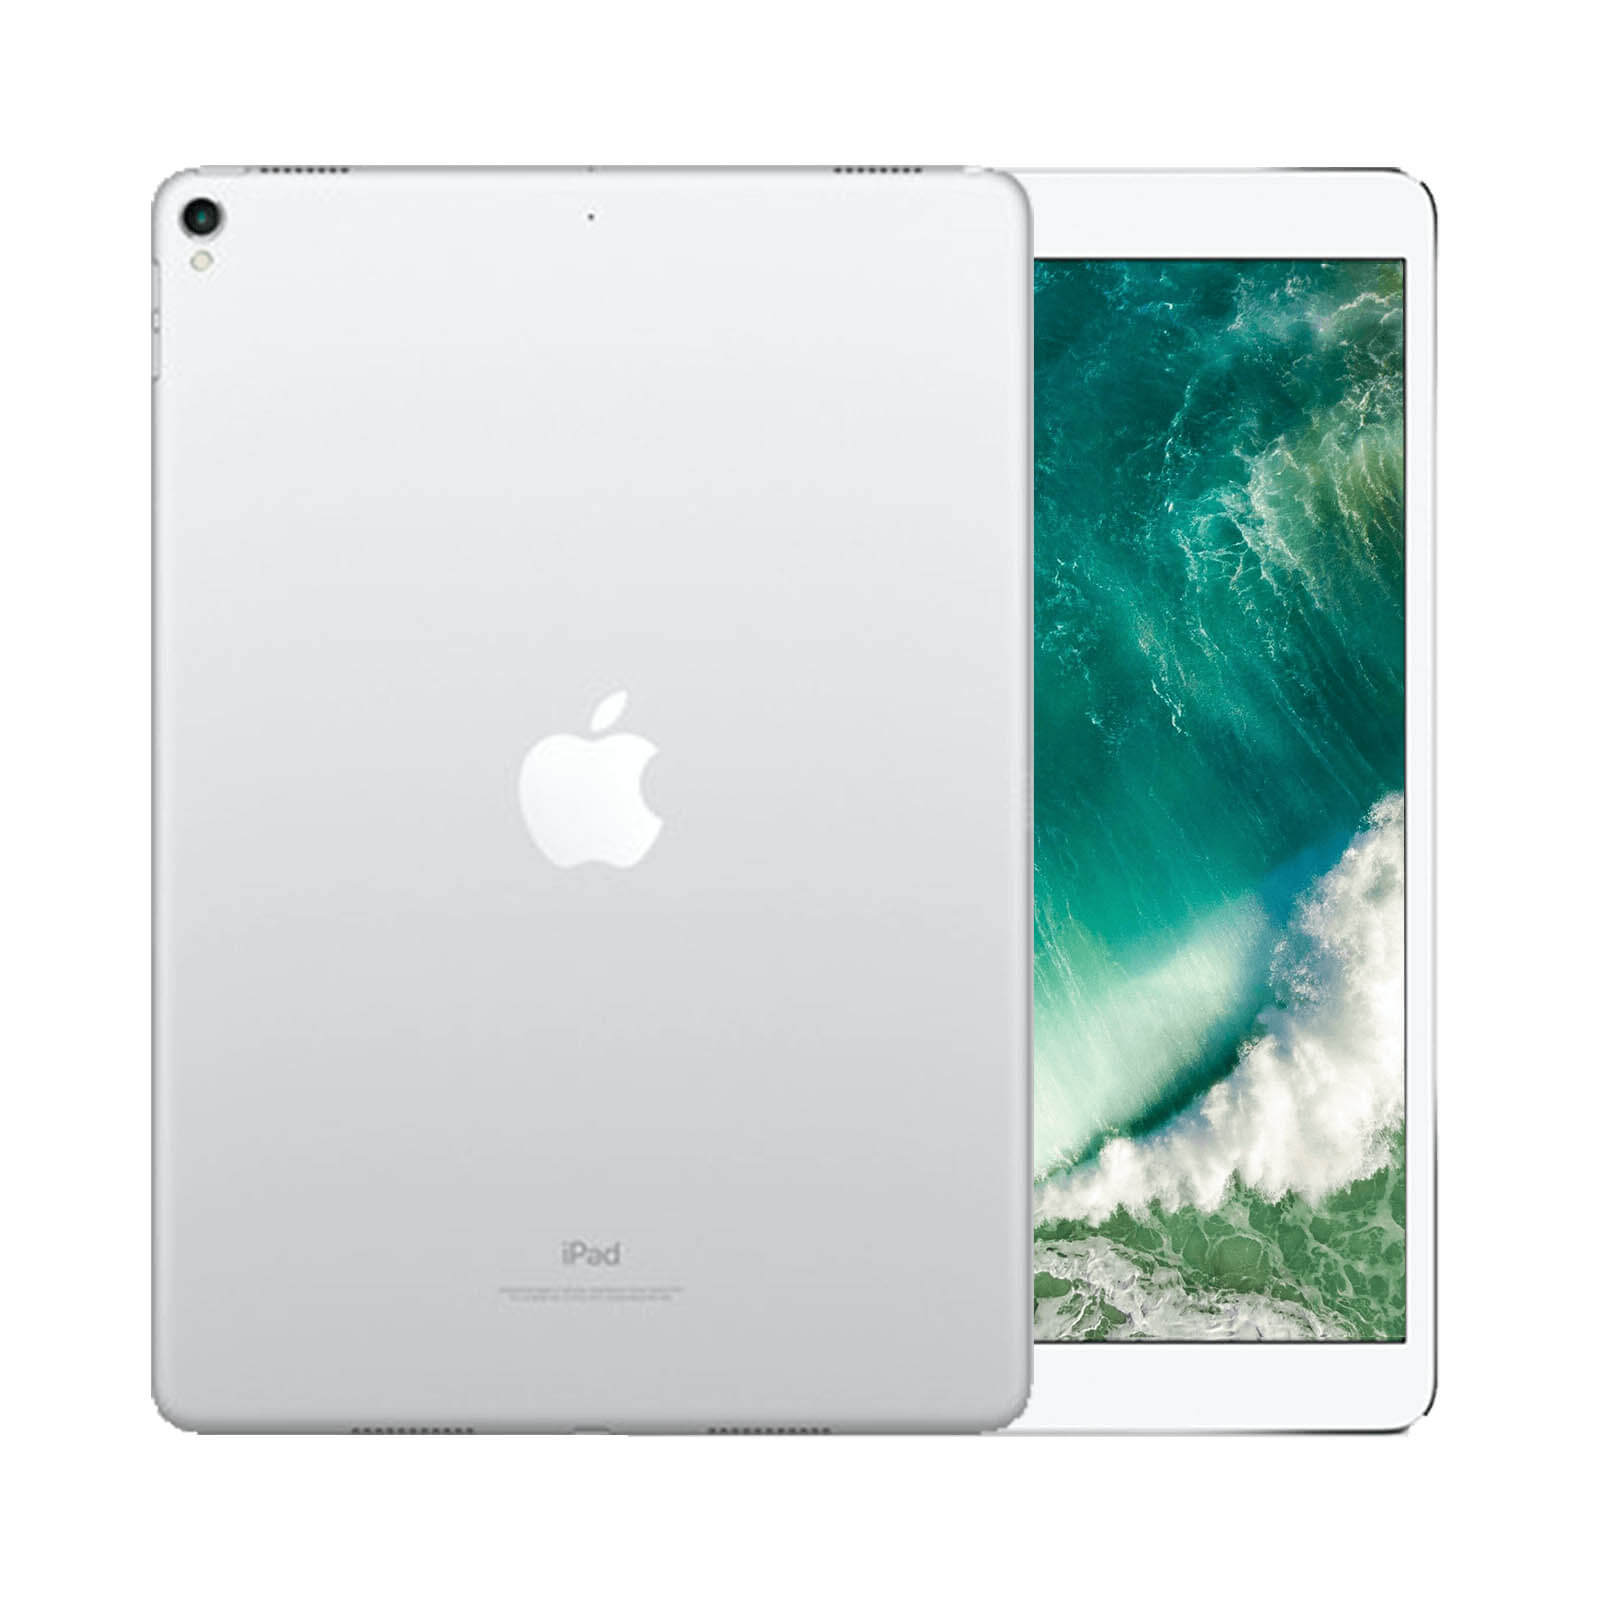 iPad Pro 11 Inch 64GB Space Grey Very Good - WiFi